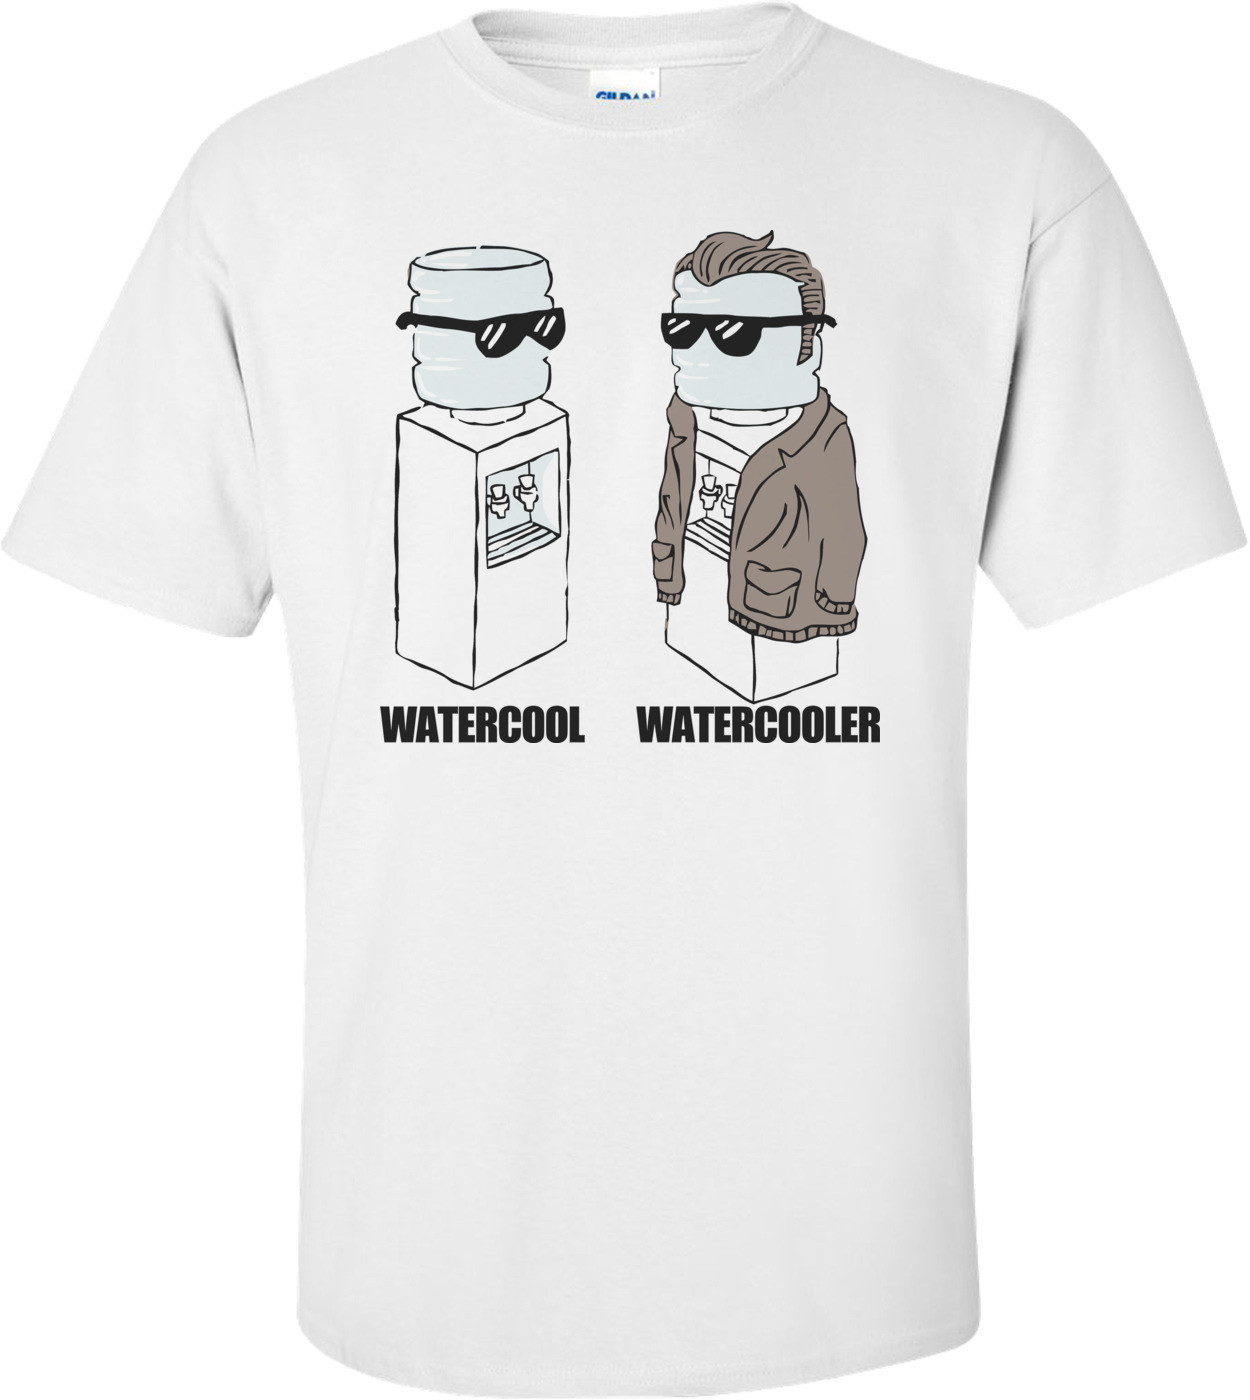 Watercool Watercooler Funny Shirt